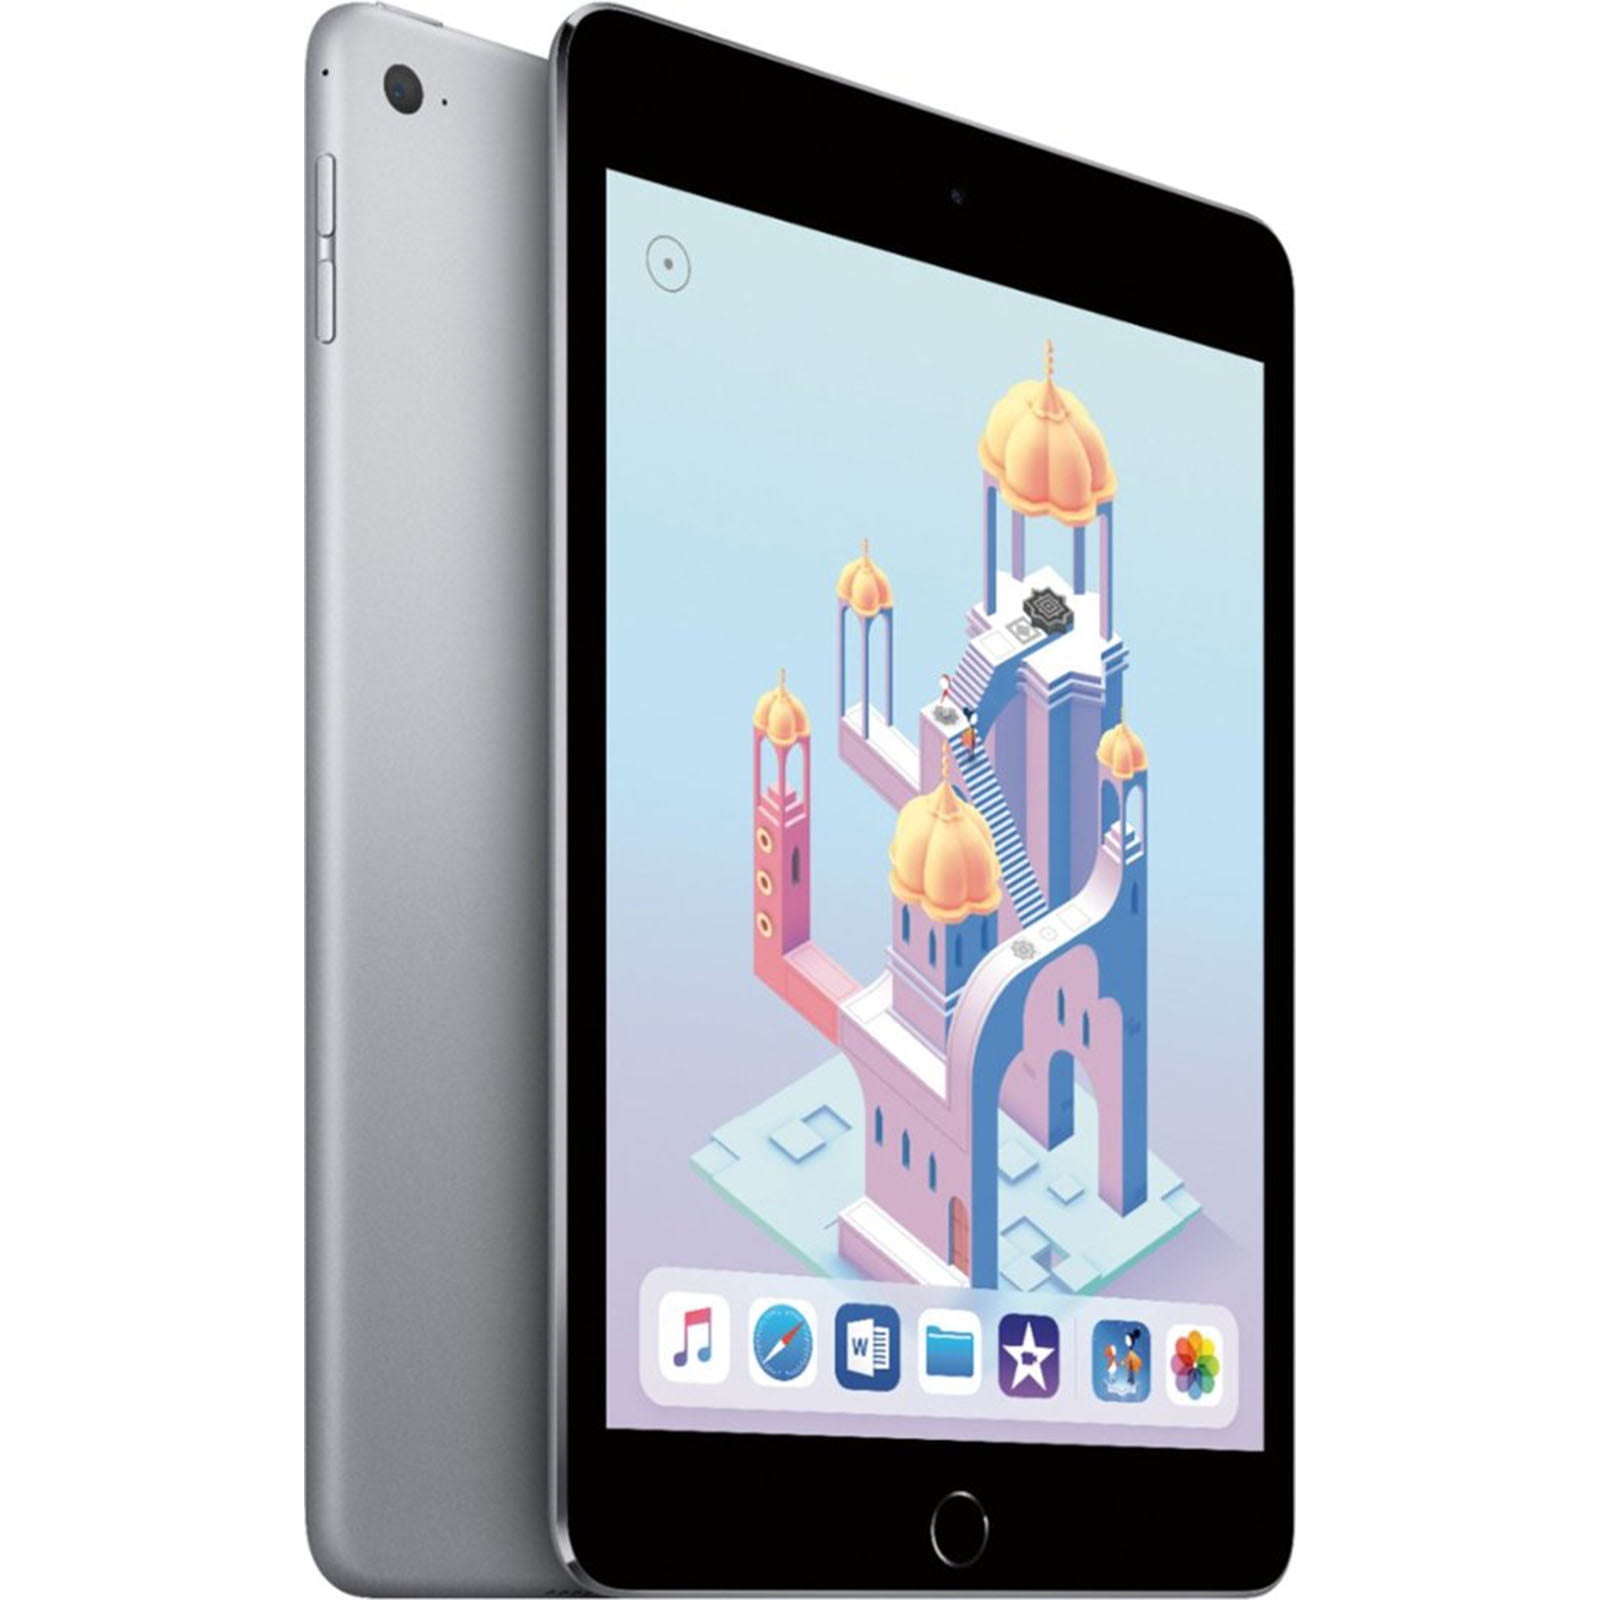 Apple iPad Mini 2 - 7.9-inch Retina Display, 16GB, Space Gray, Wi 